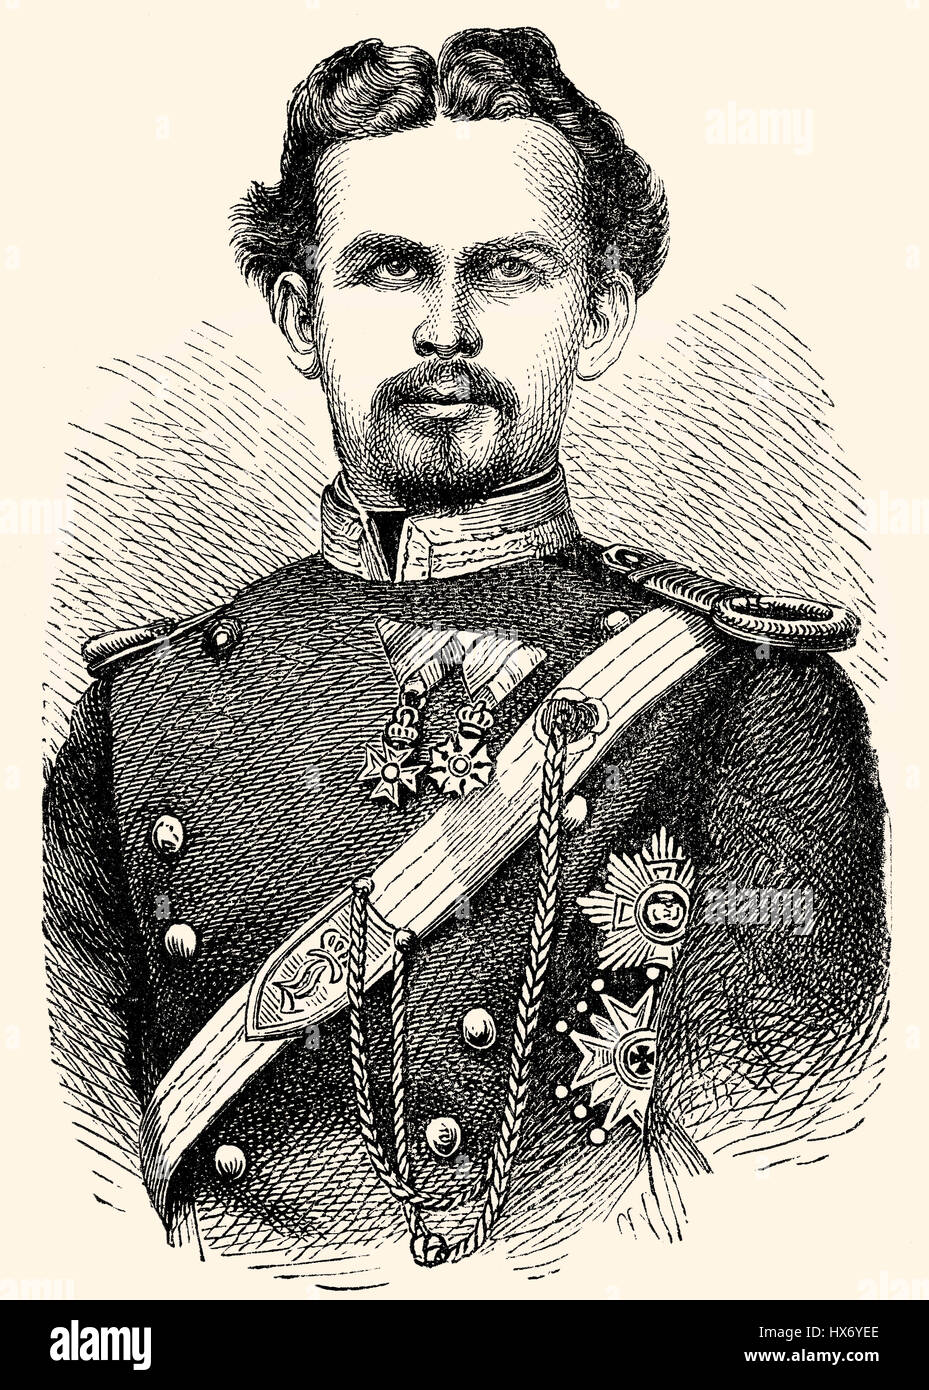 Ludwig II Otto Friedrich Wilhelm von Bavaria, 1845 - 1886, King of Bavaria Stock Photo